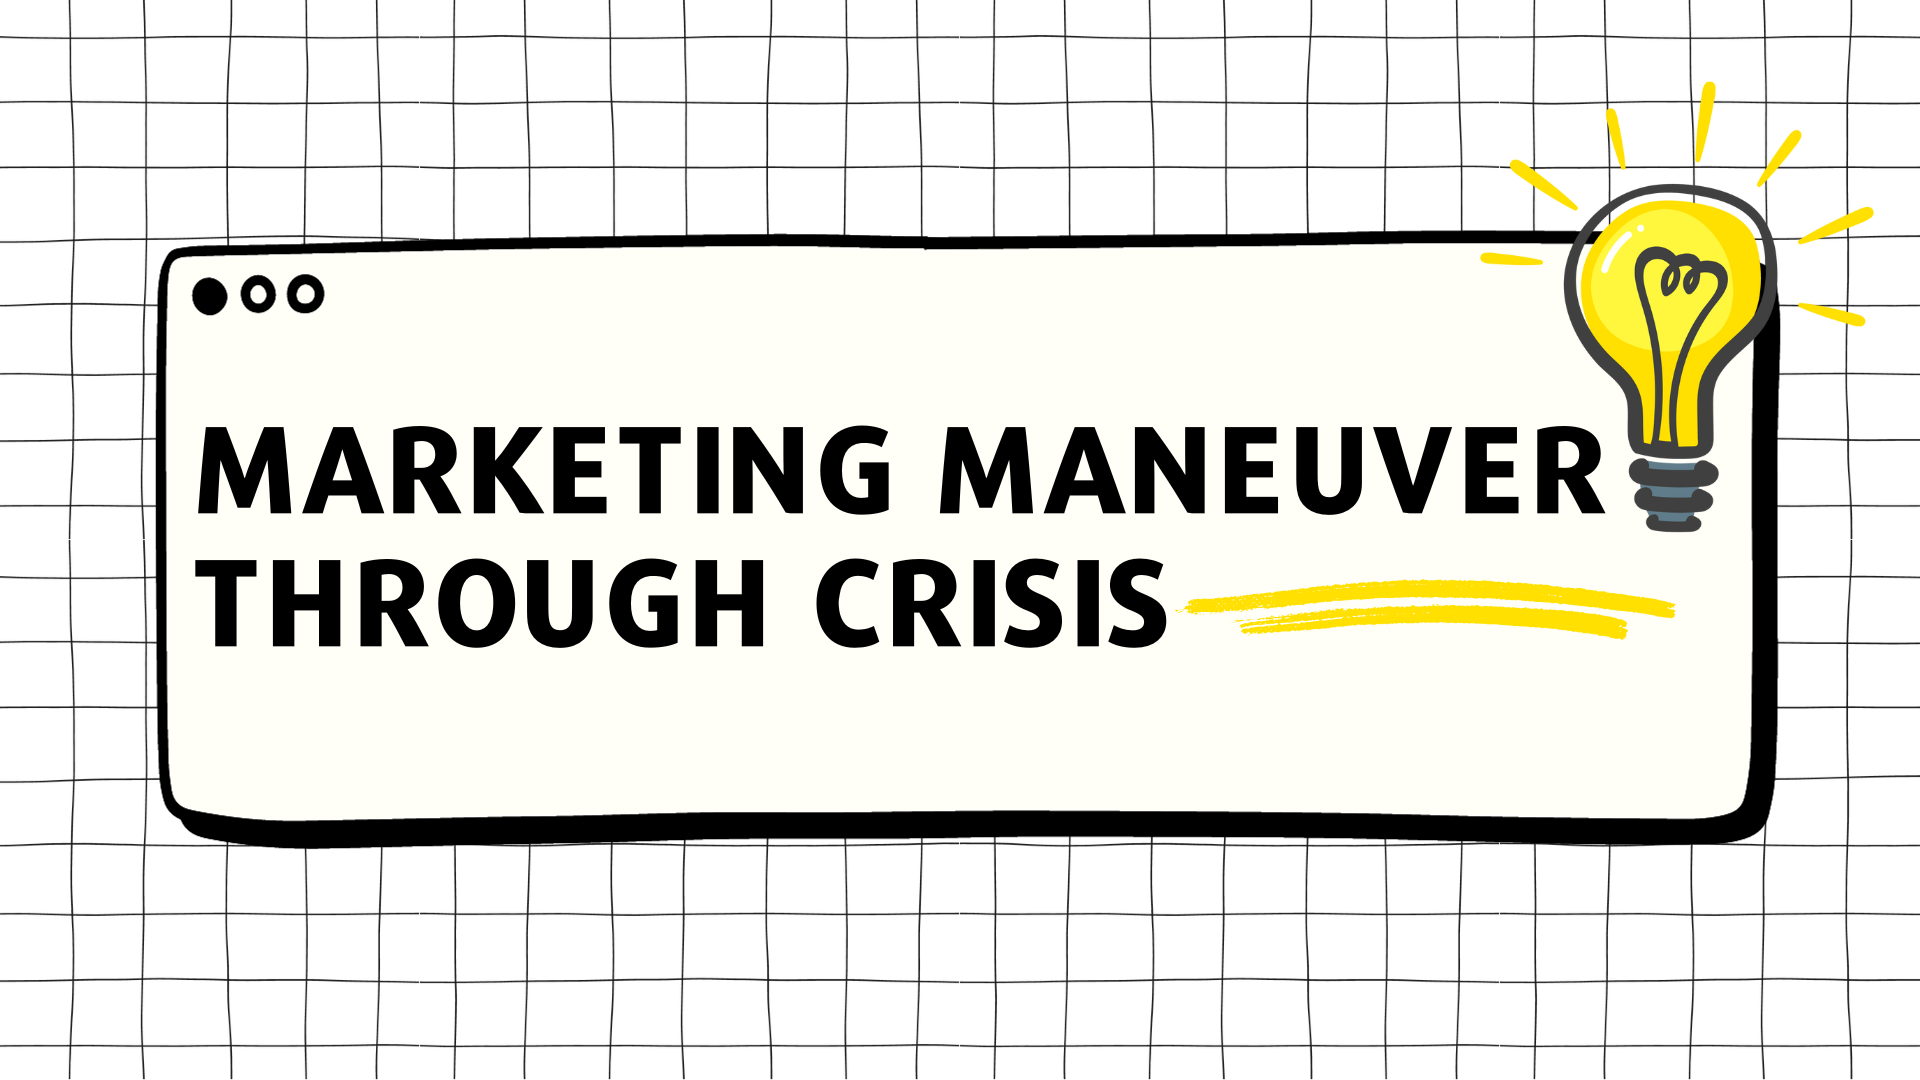 Course Image HR Sharing Session - Marketing Maneuver Through Crisis